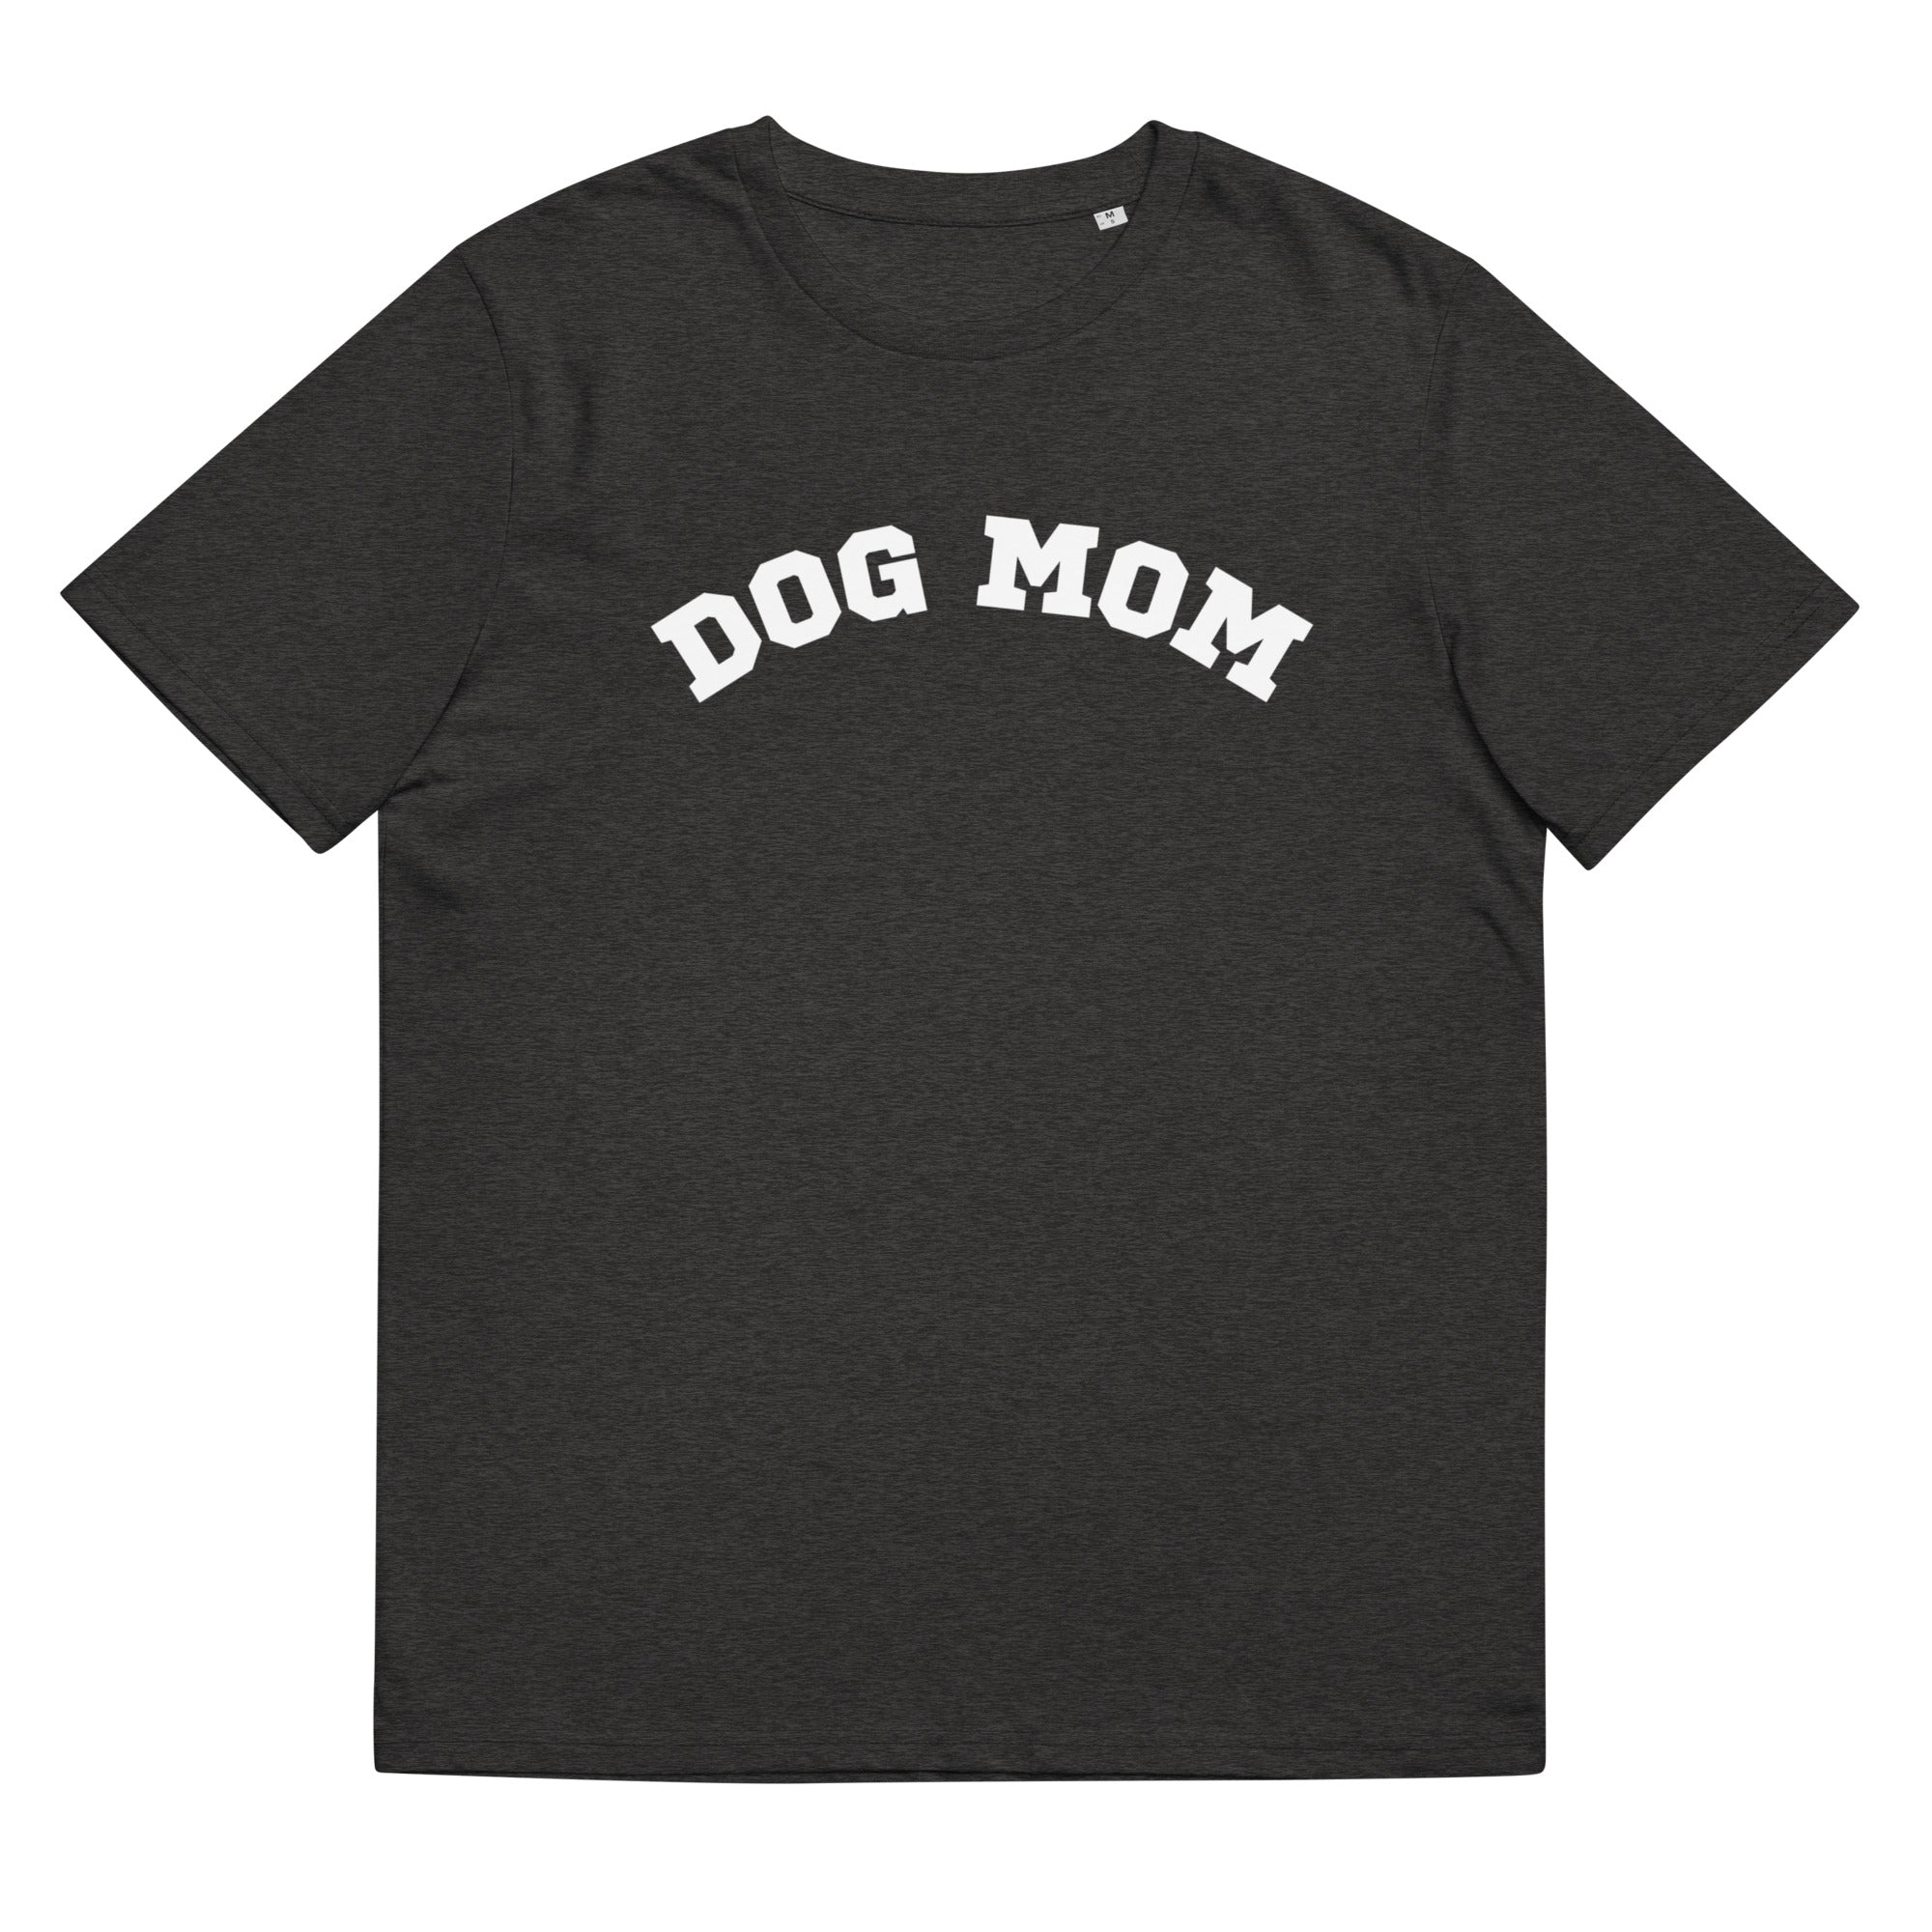 Dog Mom Organic Cotton T-shirt